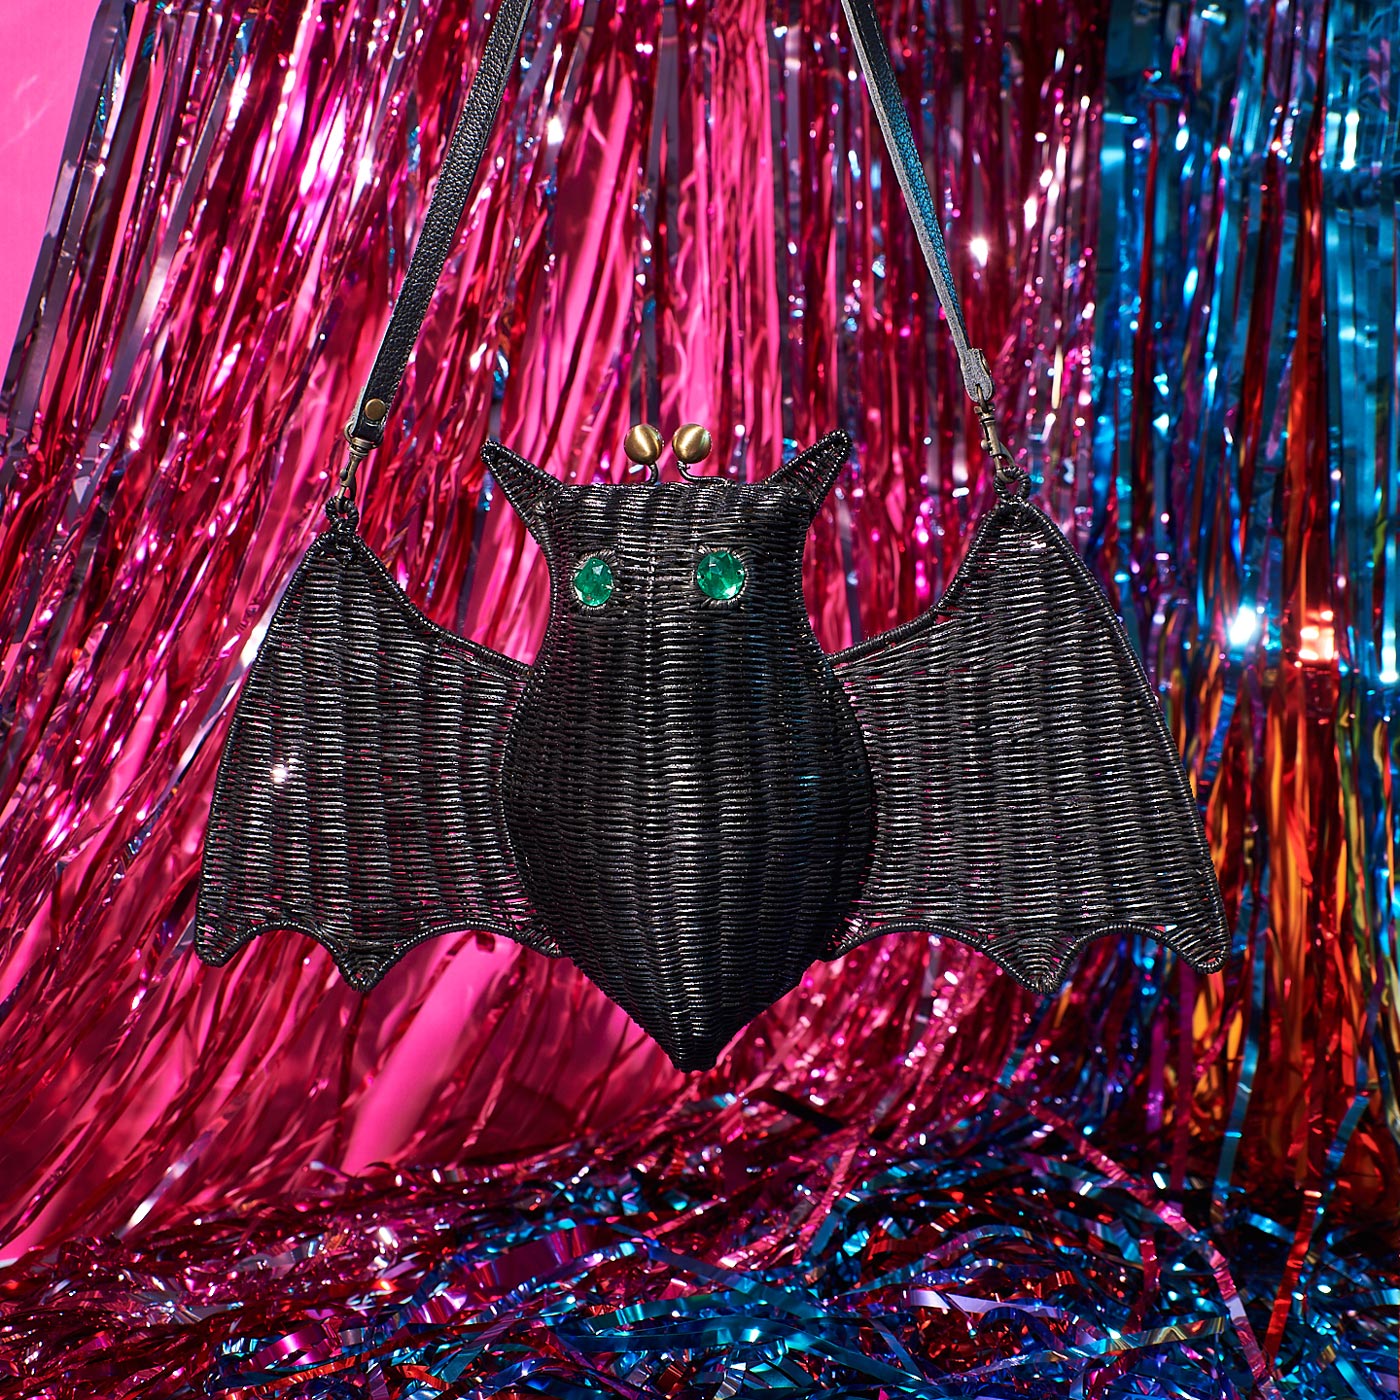 Wicker Darling's Batholomew the bat purse